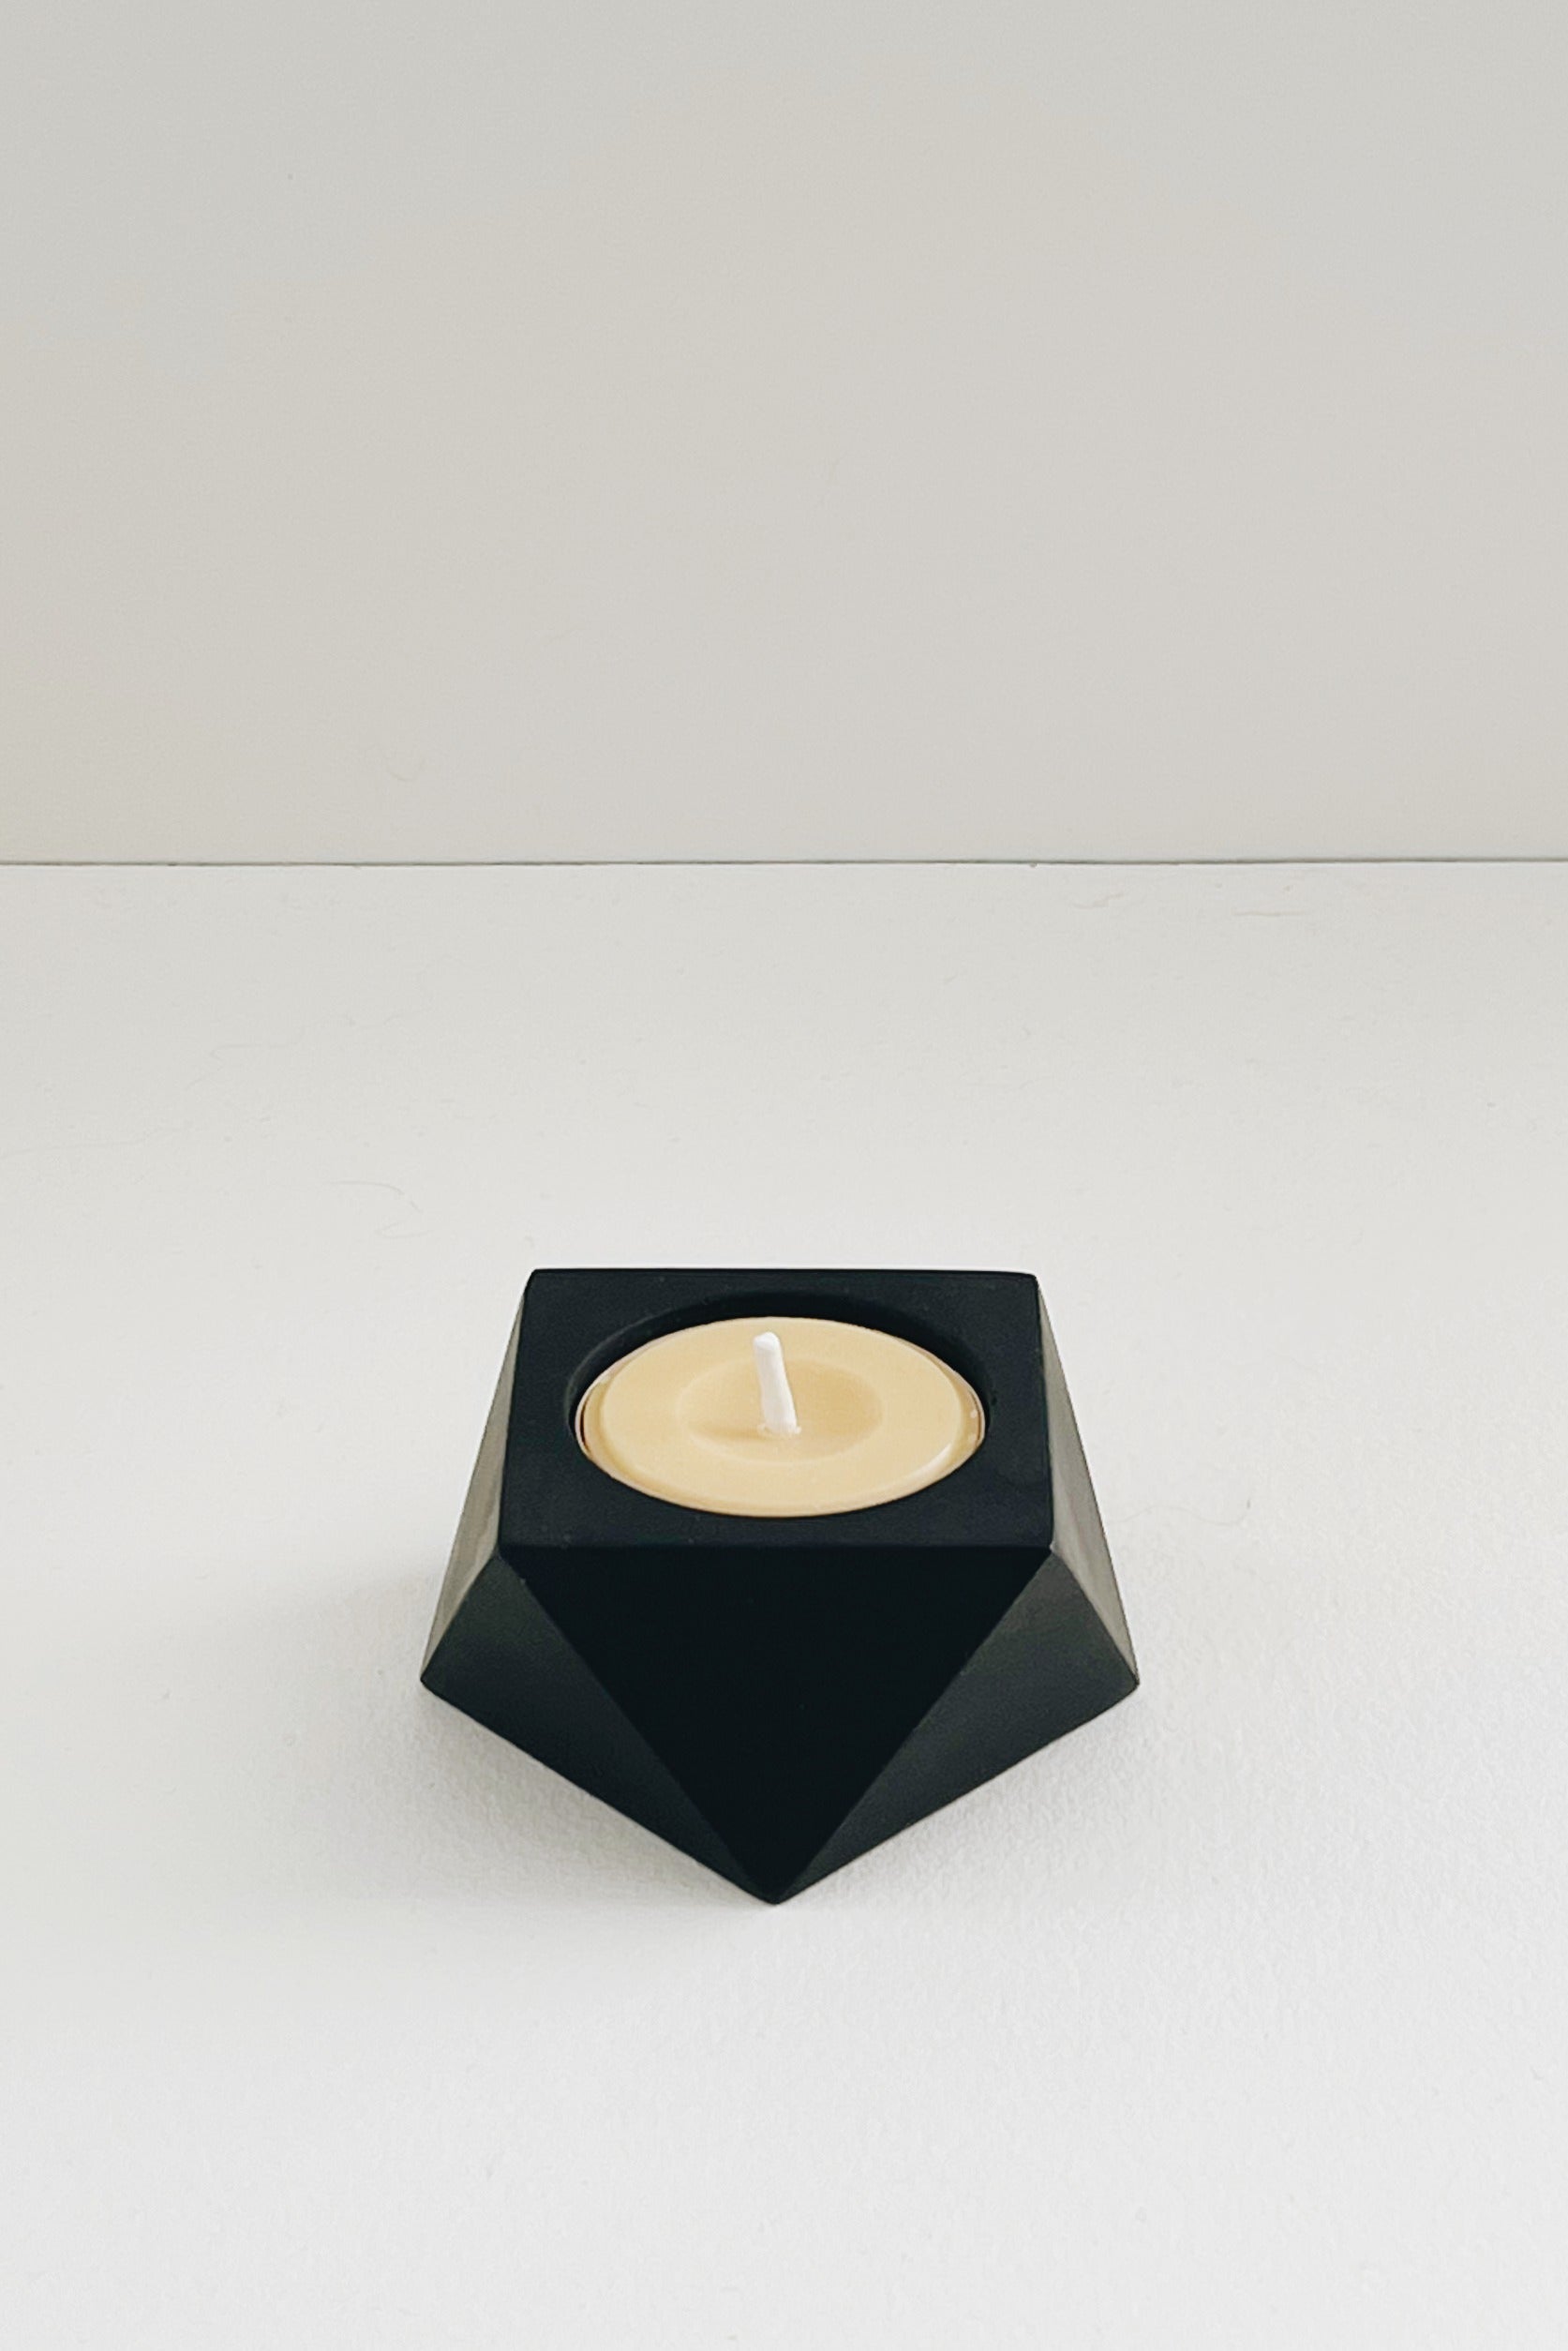 Daiyo Taper & Tealight Reversi Candle Holder - Black